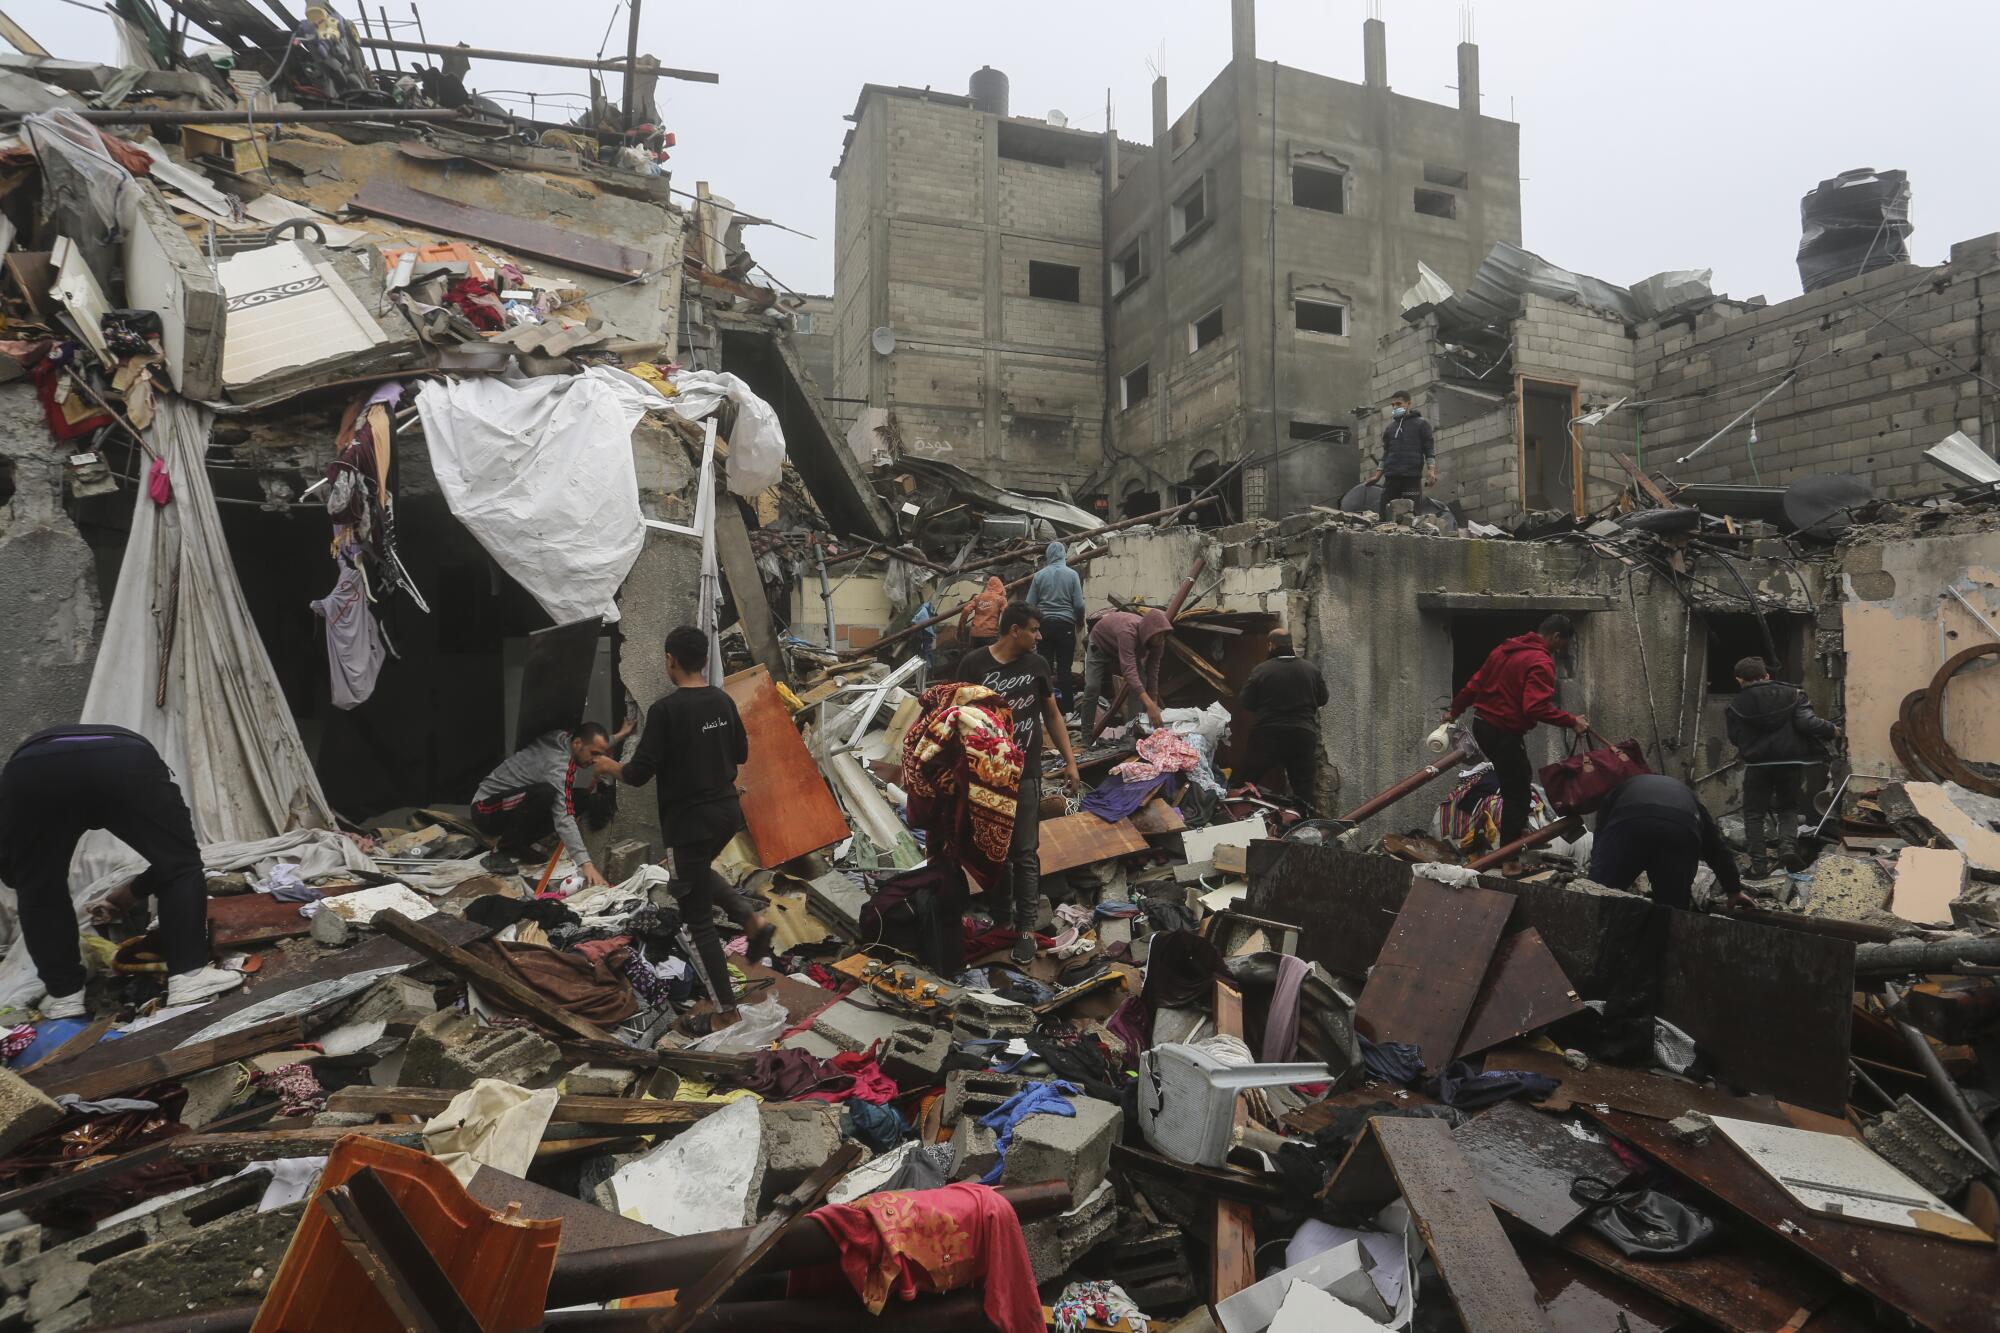 Gazans salvaging their belongings after an Israeli airstrike on Rafah